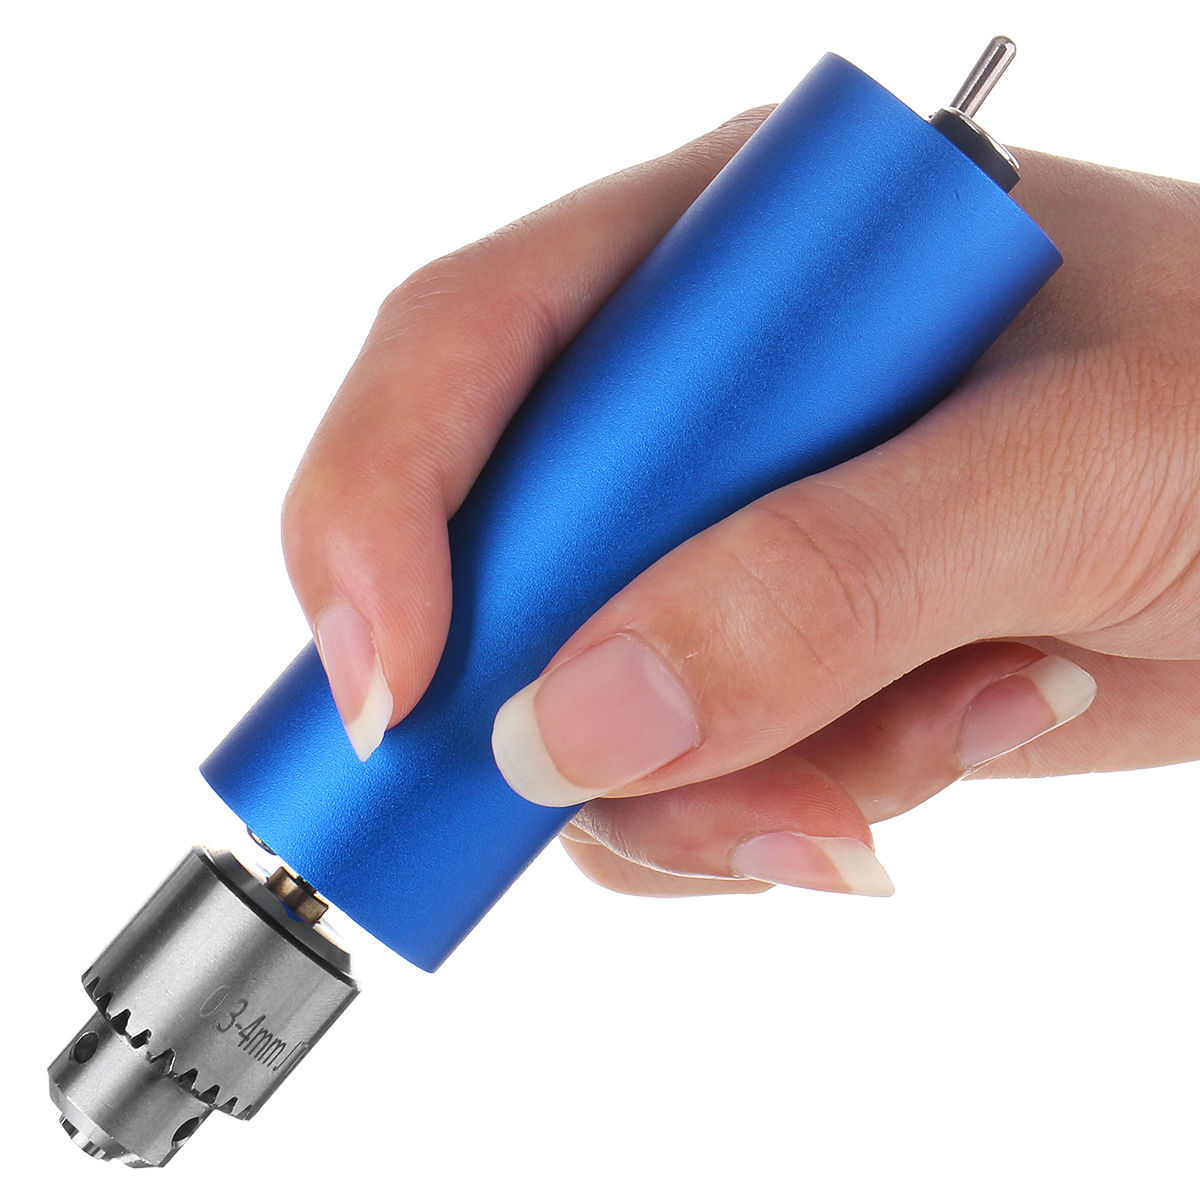 Mini-Electric-Hand-Drill-Grinding-Polishing-Tool-with-DIY-385-Ball-Bearing-Motor-Clamping-03-4mm-1760090-6